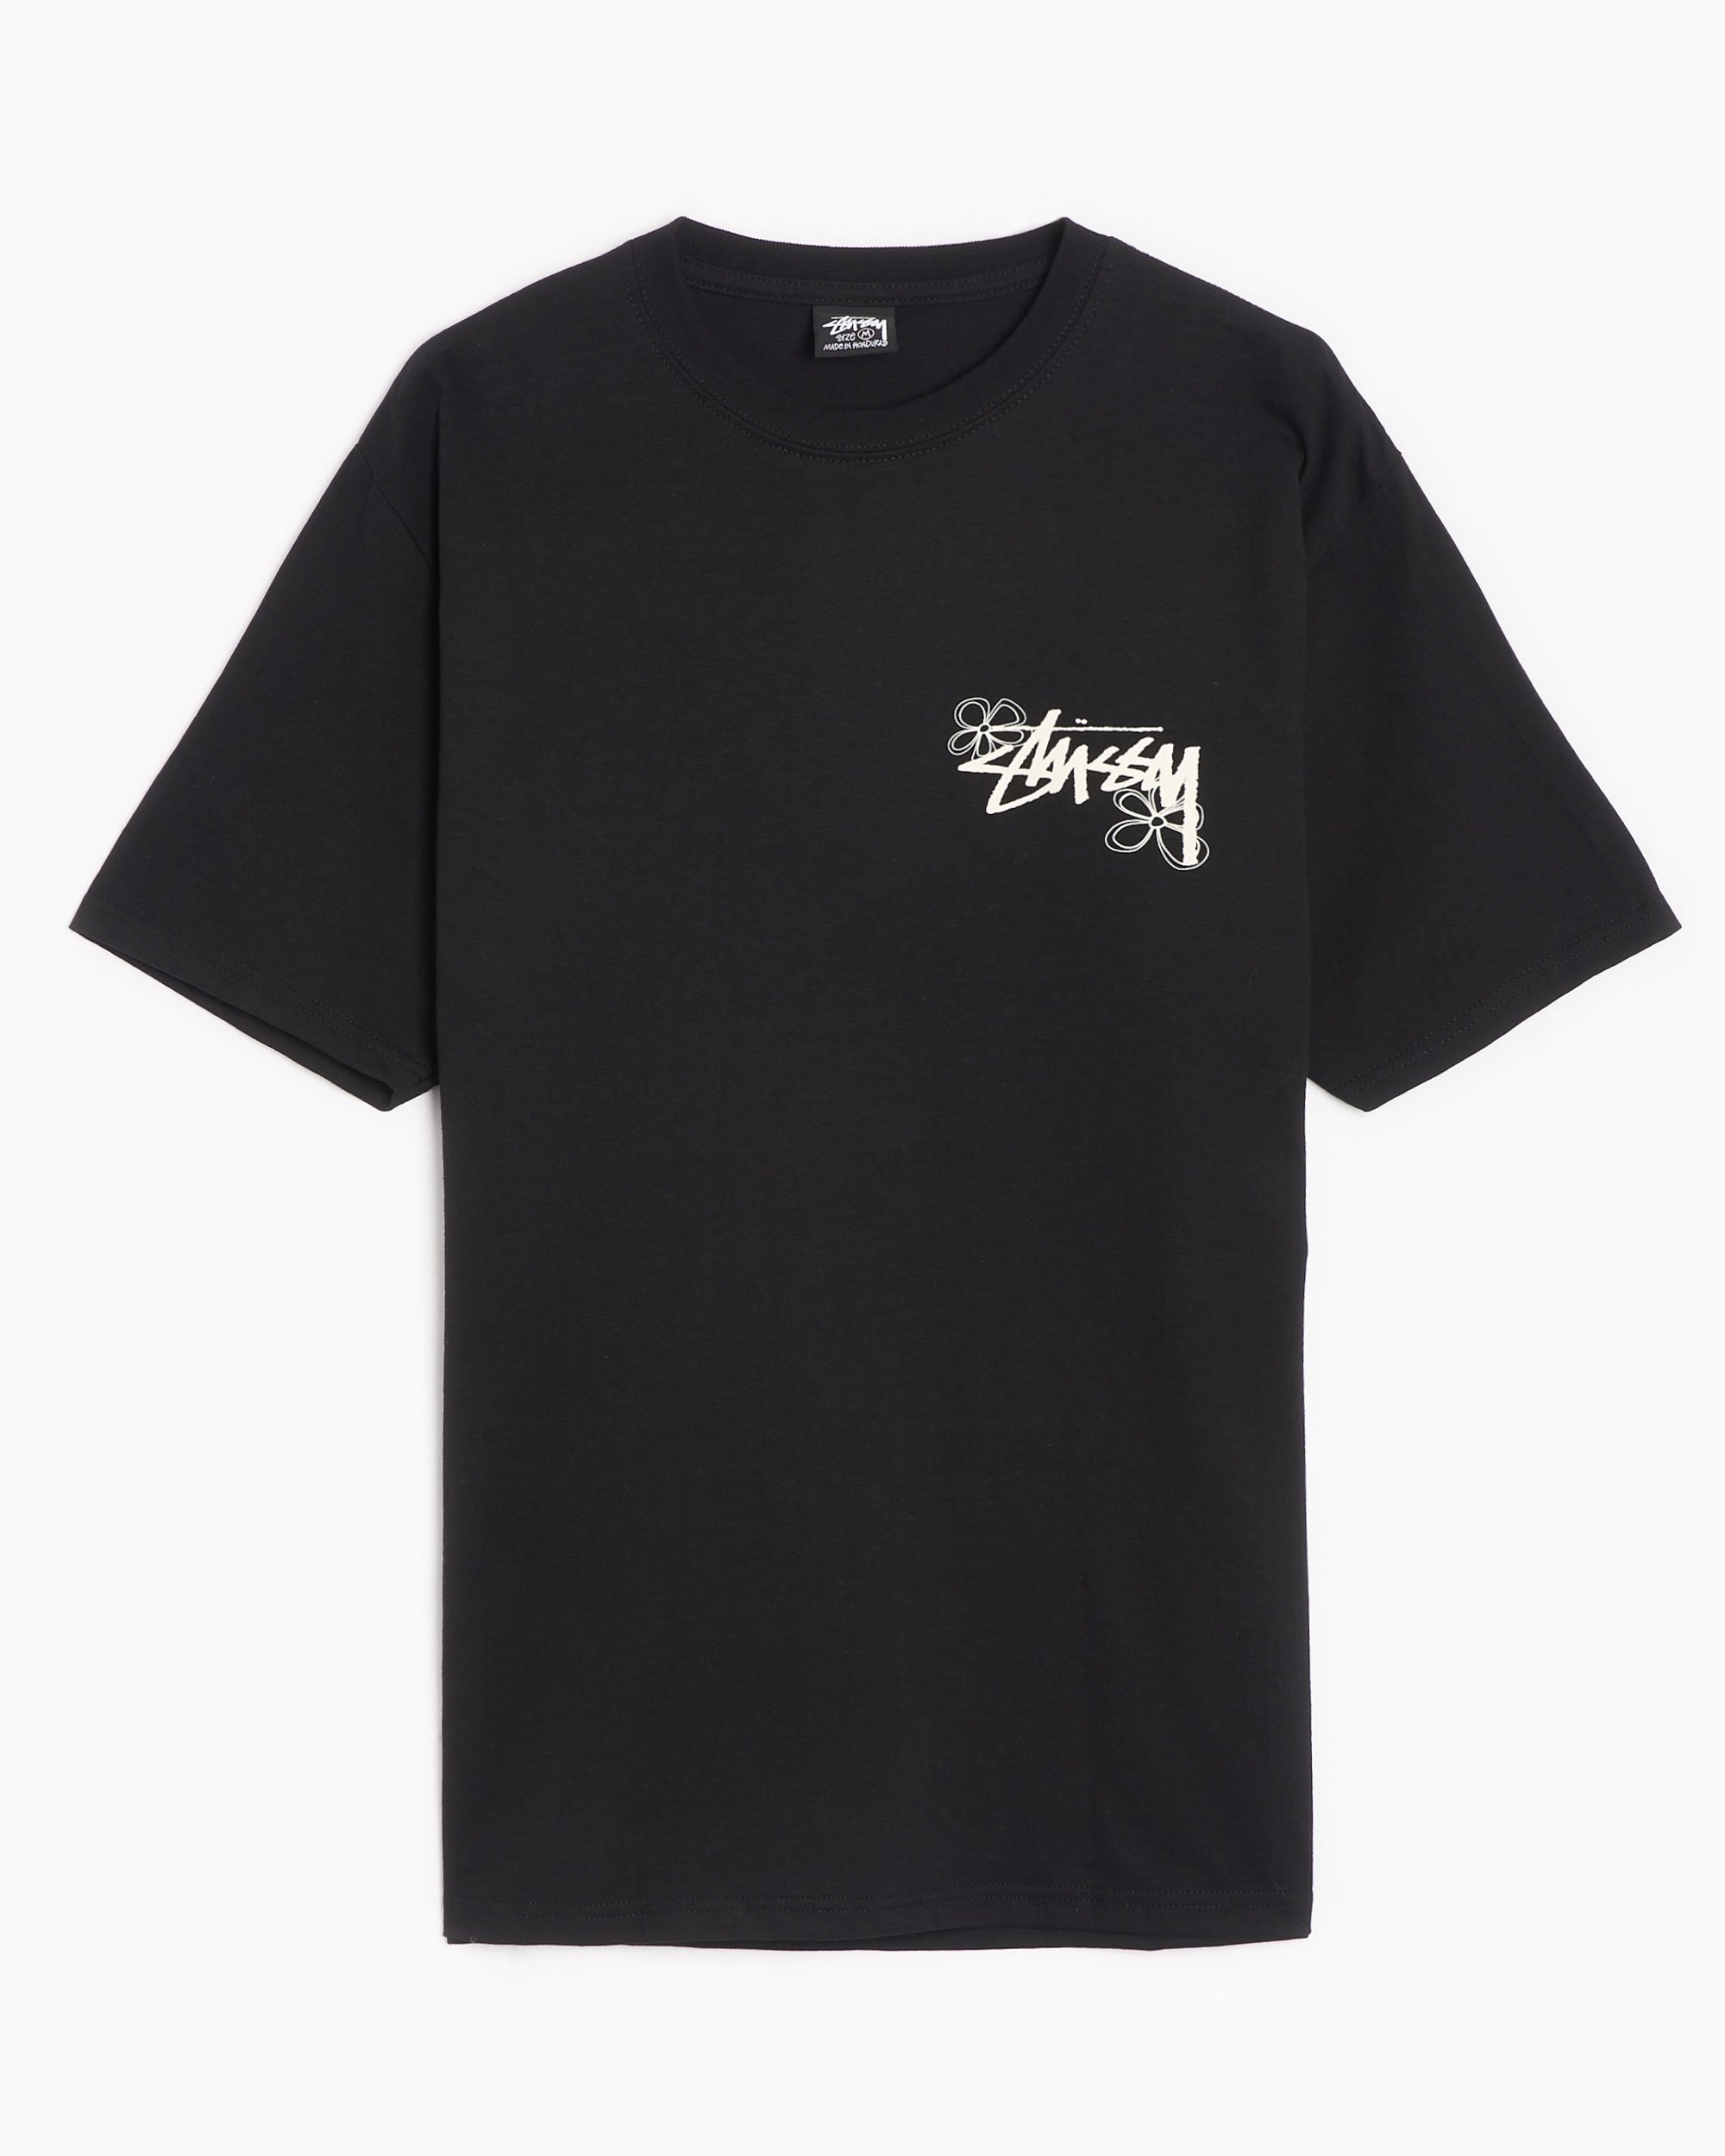 Stüssy Summer Lb Men's T-Shirt Black 1904907-BLAC| Buy Online at